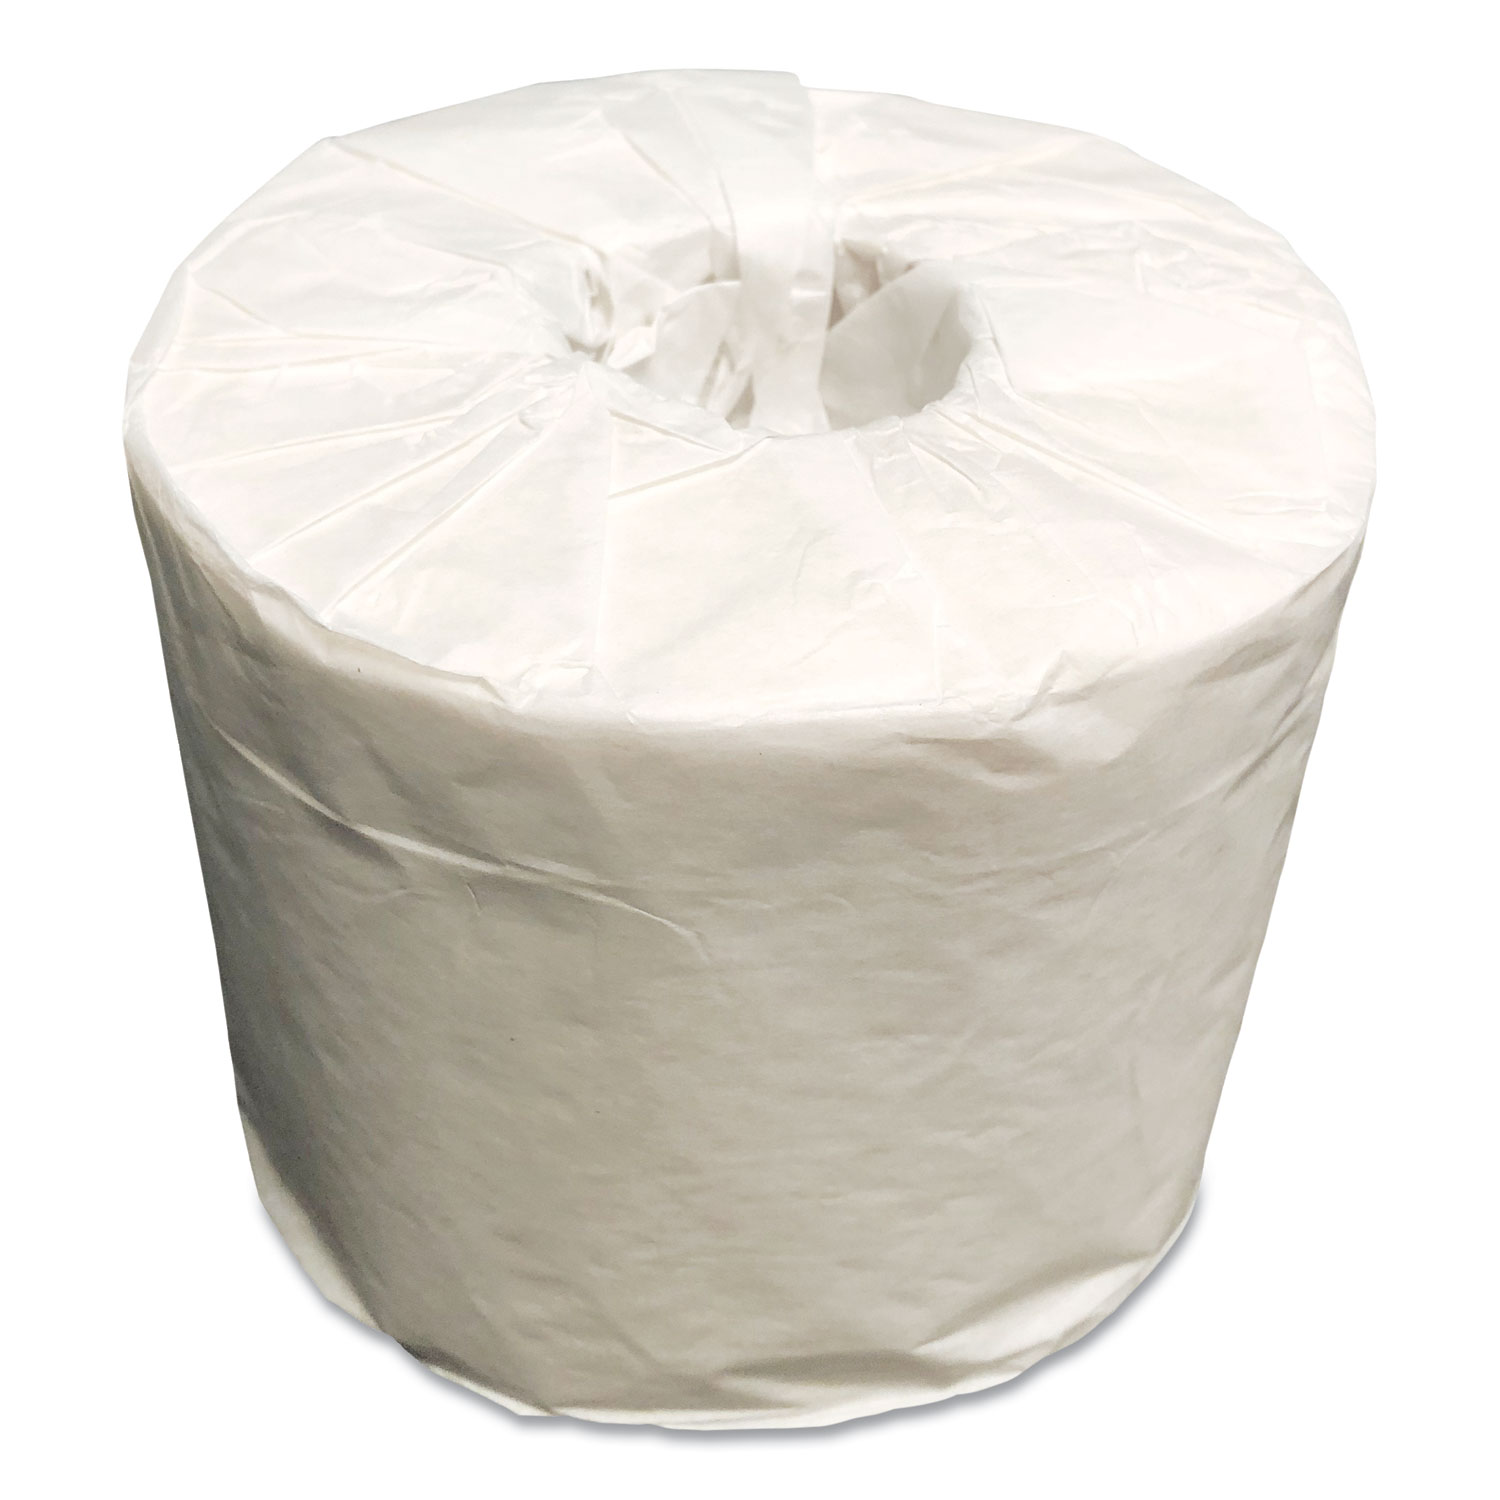  Scott 04460 Essential Standard Roll Bathroom Tissue, Plain Wrap, Septic Safe, 2-Ply, White, 550 Sheets/Roll, 80 Rolls/Carton (KCC04460PW) 